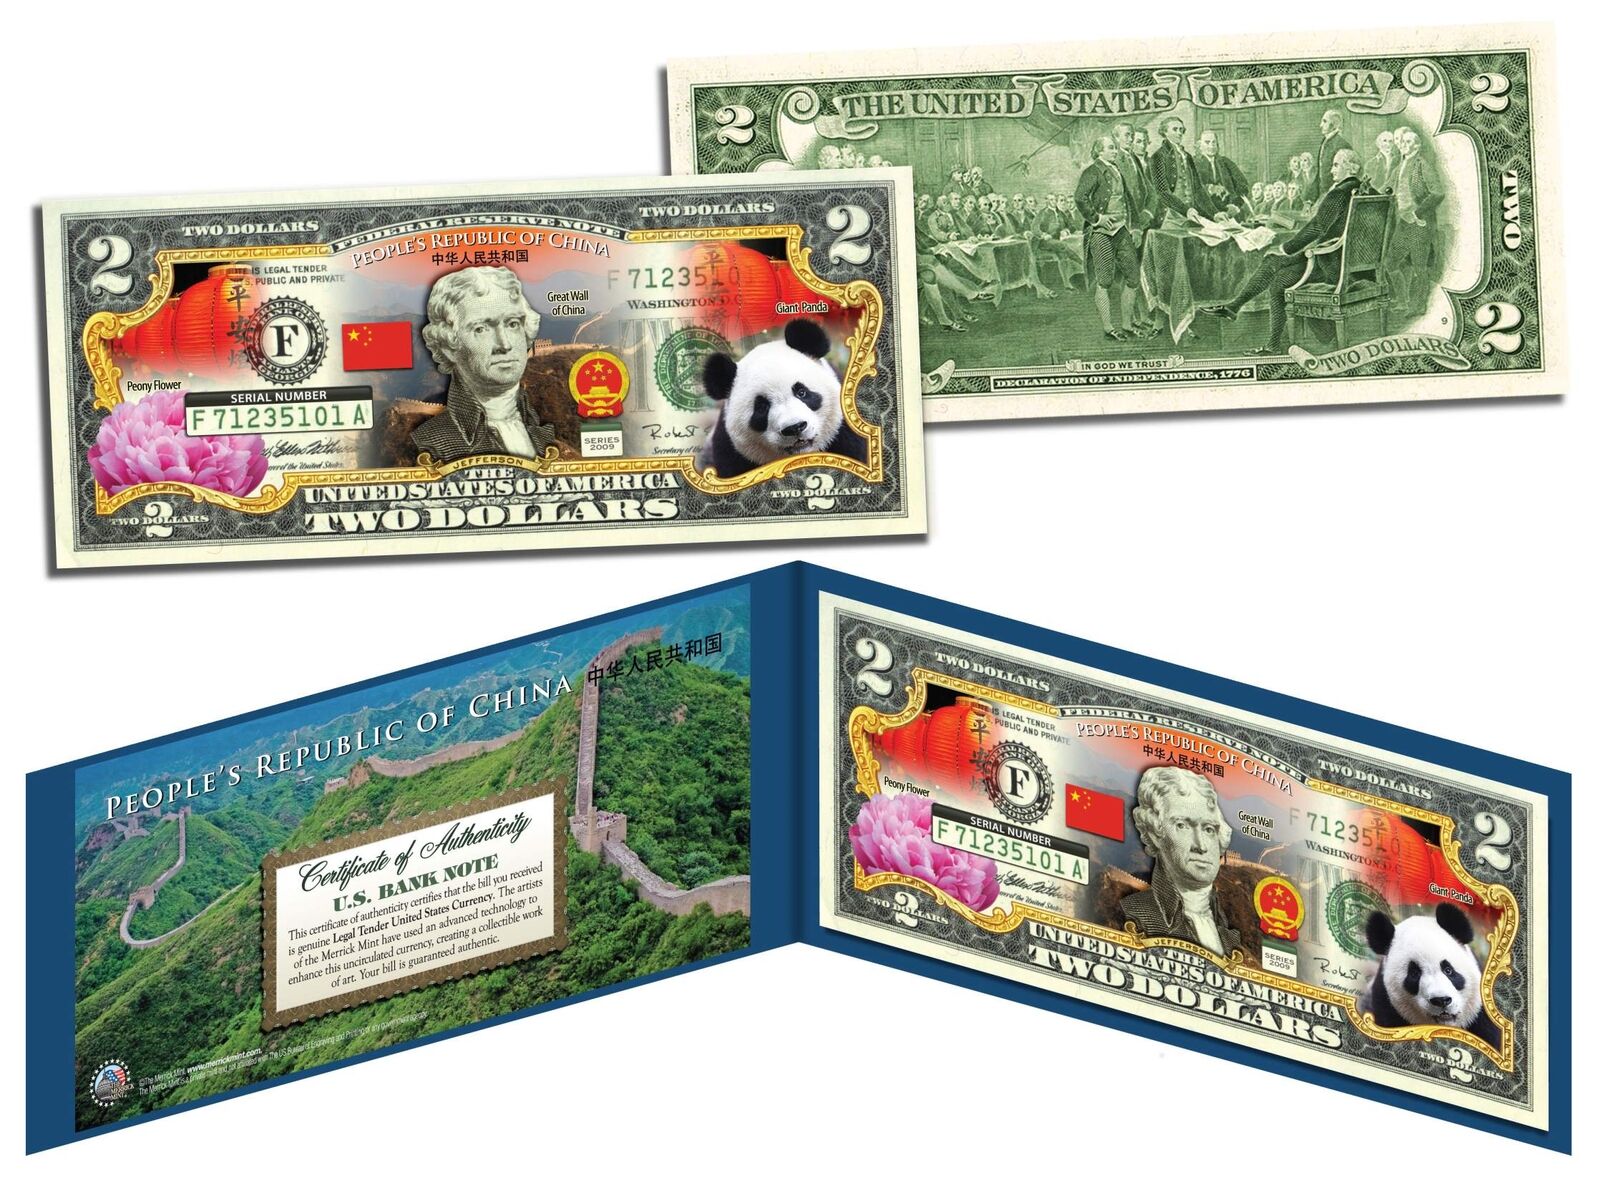 PEOPLE'S REPUBLIC OF CHINA Colorized $2 Bill U.S. Legal Tender Panda Great Wall